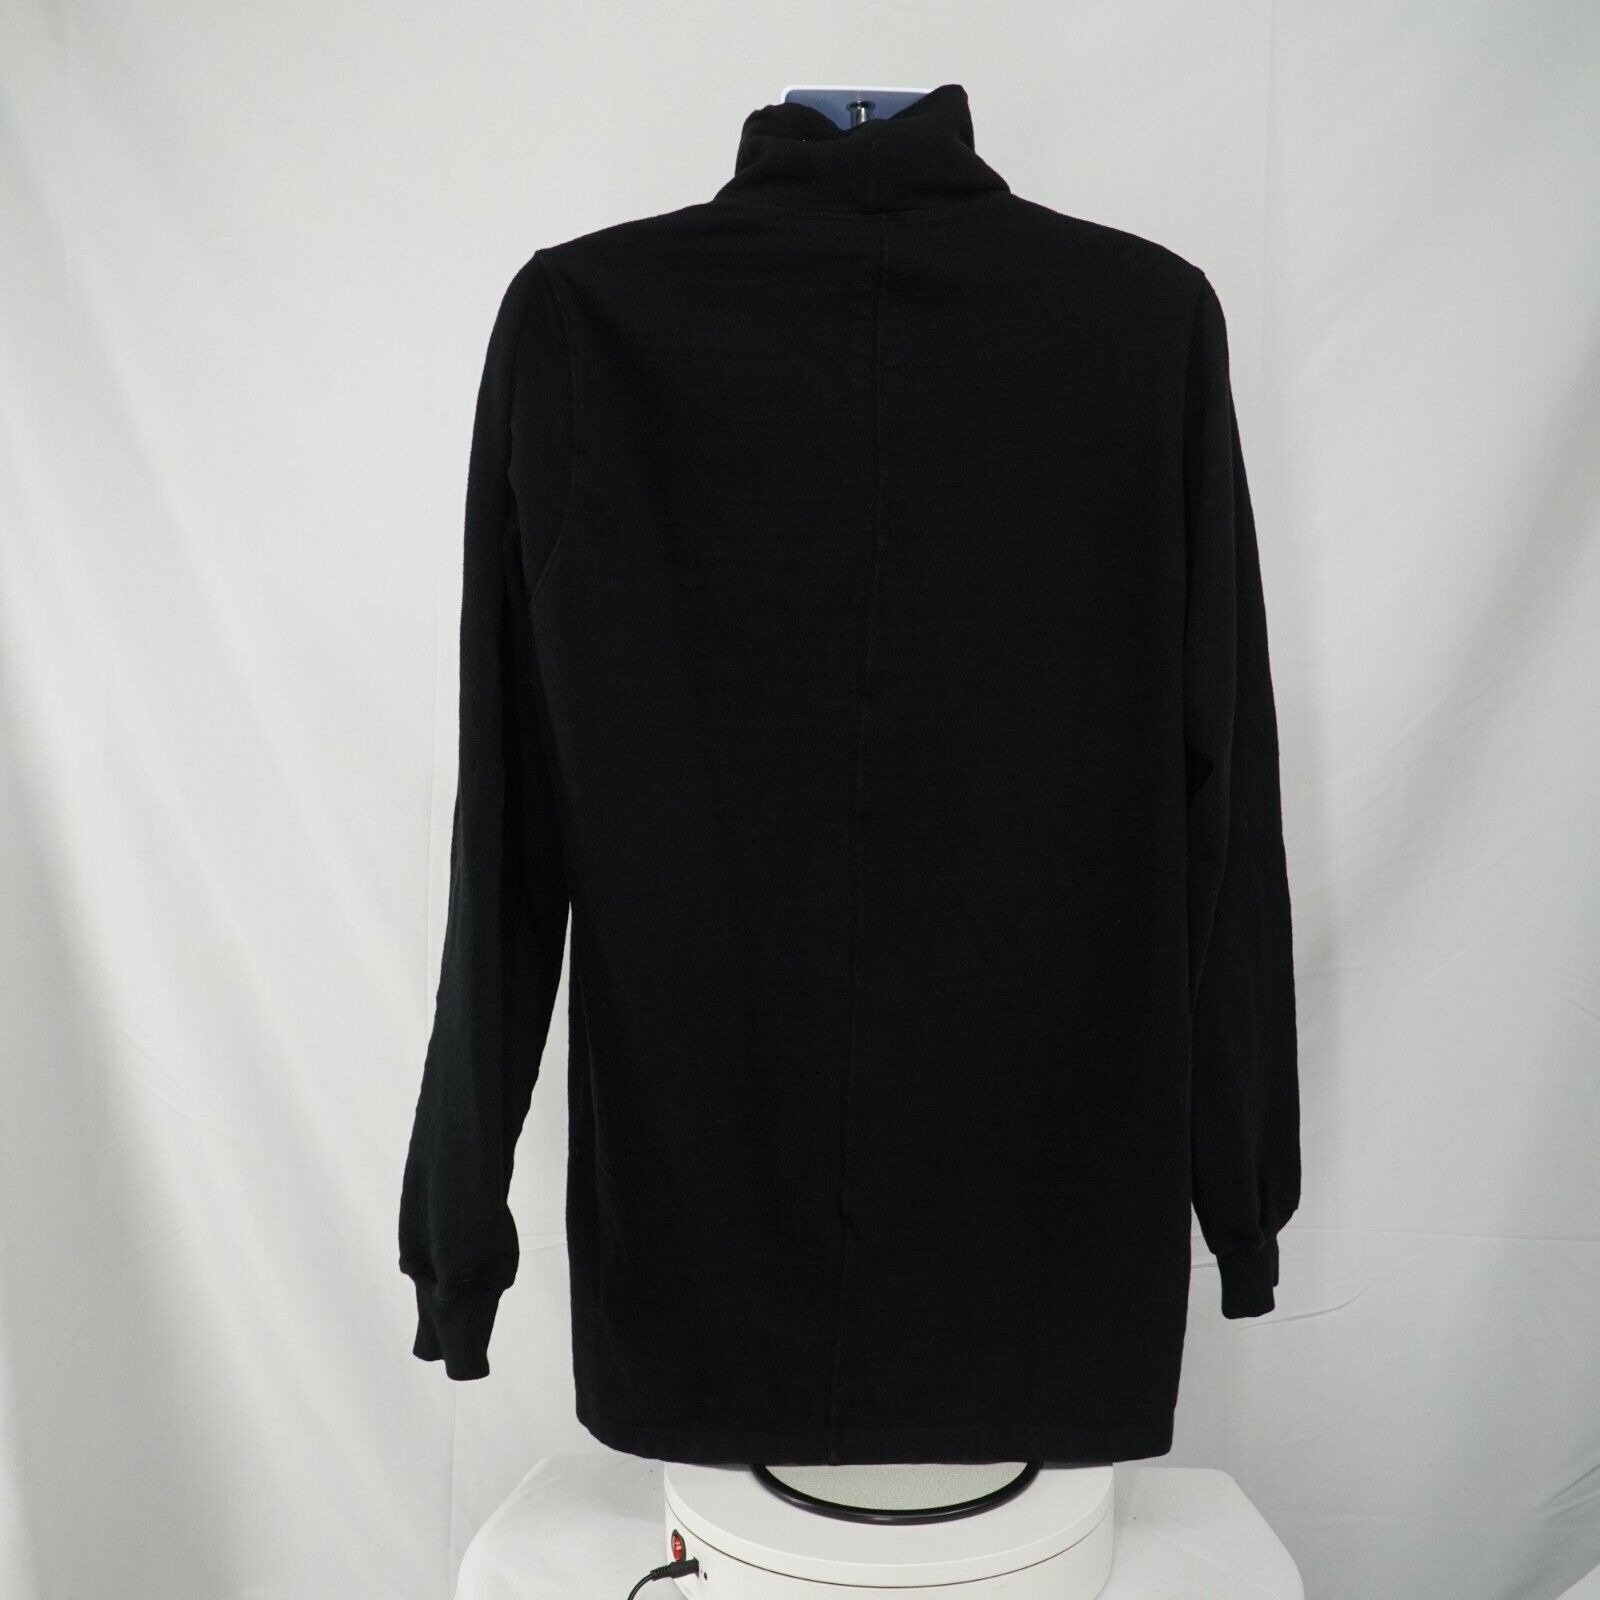 Rick Black Turtleneck Sweater Size Medium FW17 Glitter - 13